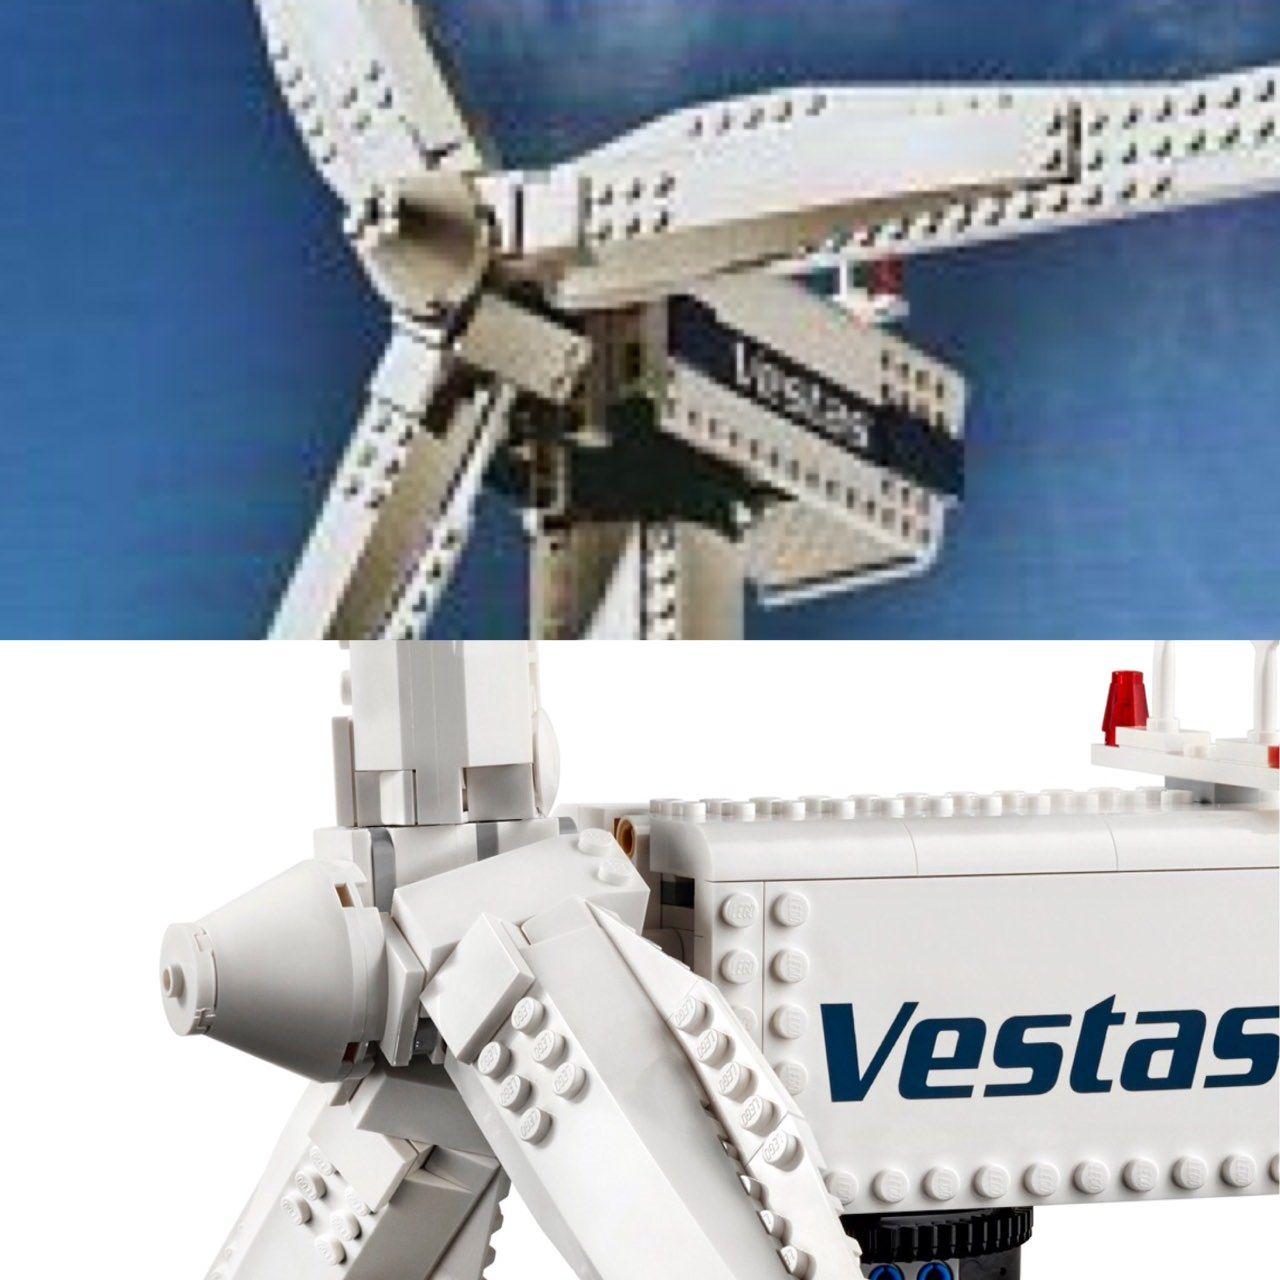 Vestas Logo - Vestas Wind Turbine: From 4999 to 10268 - AvenueOfBricks.com - Lego ...